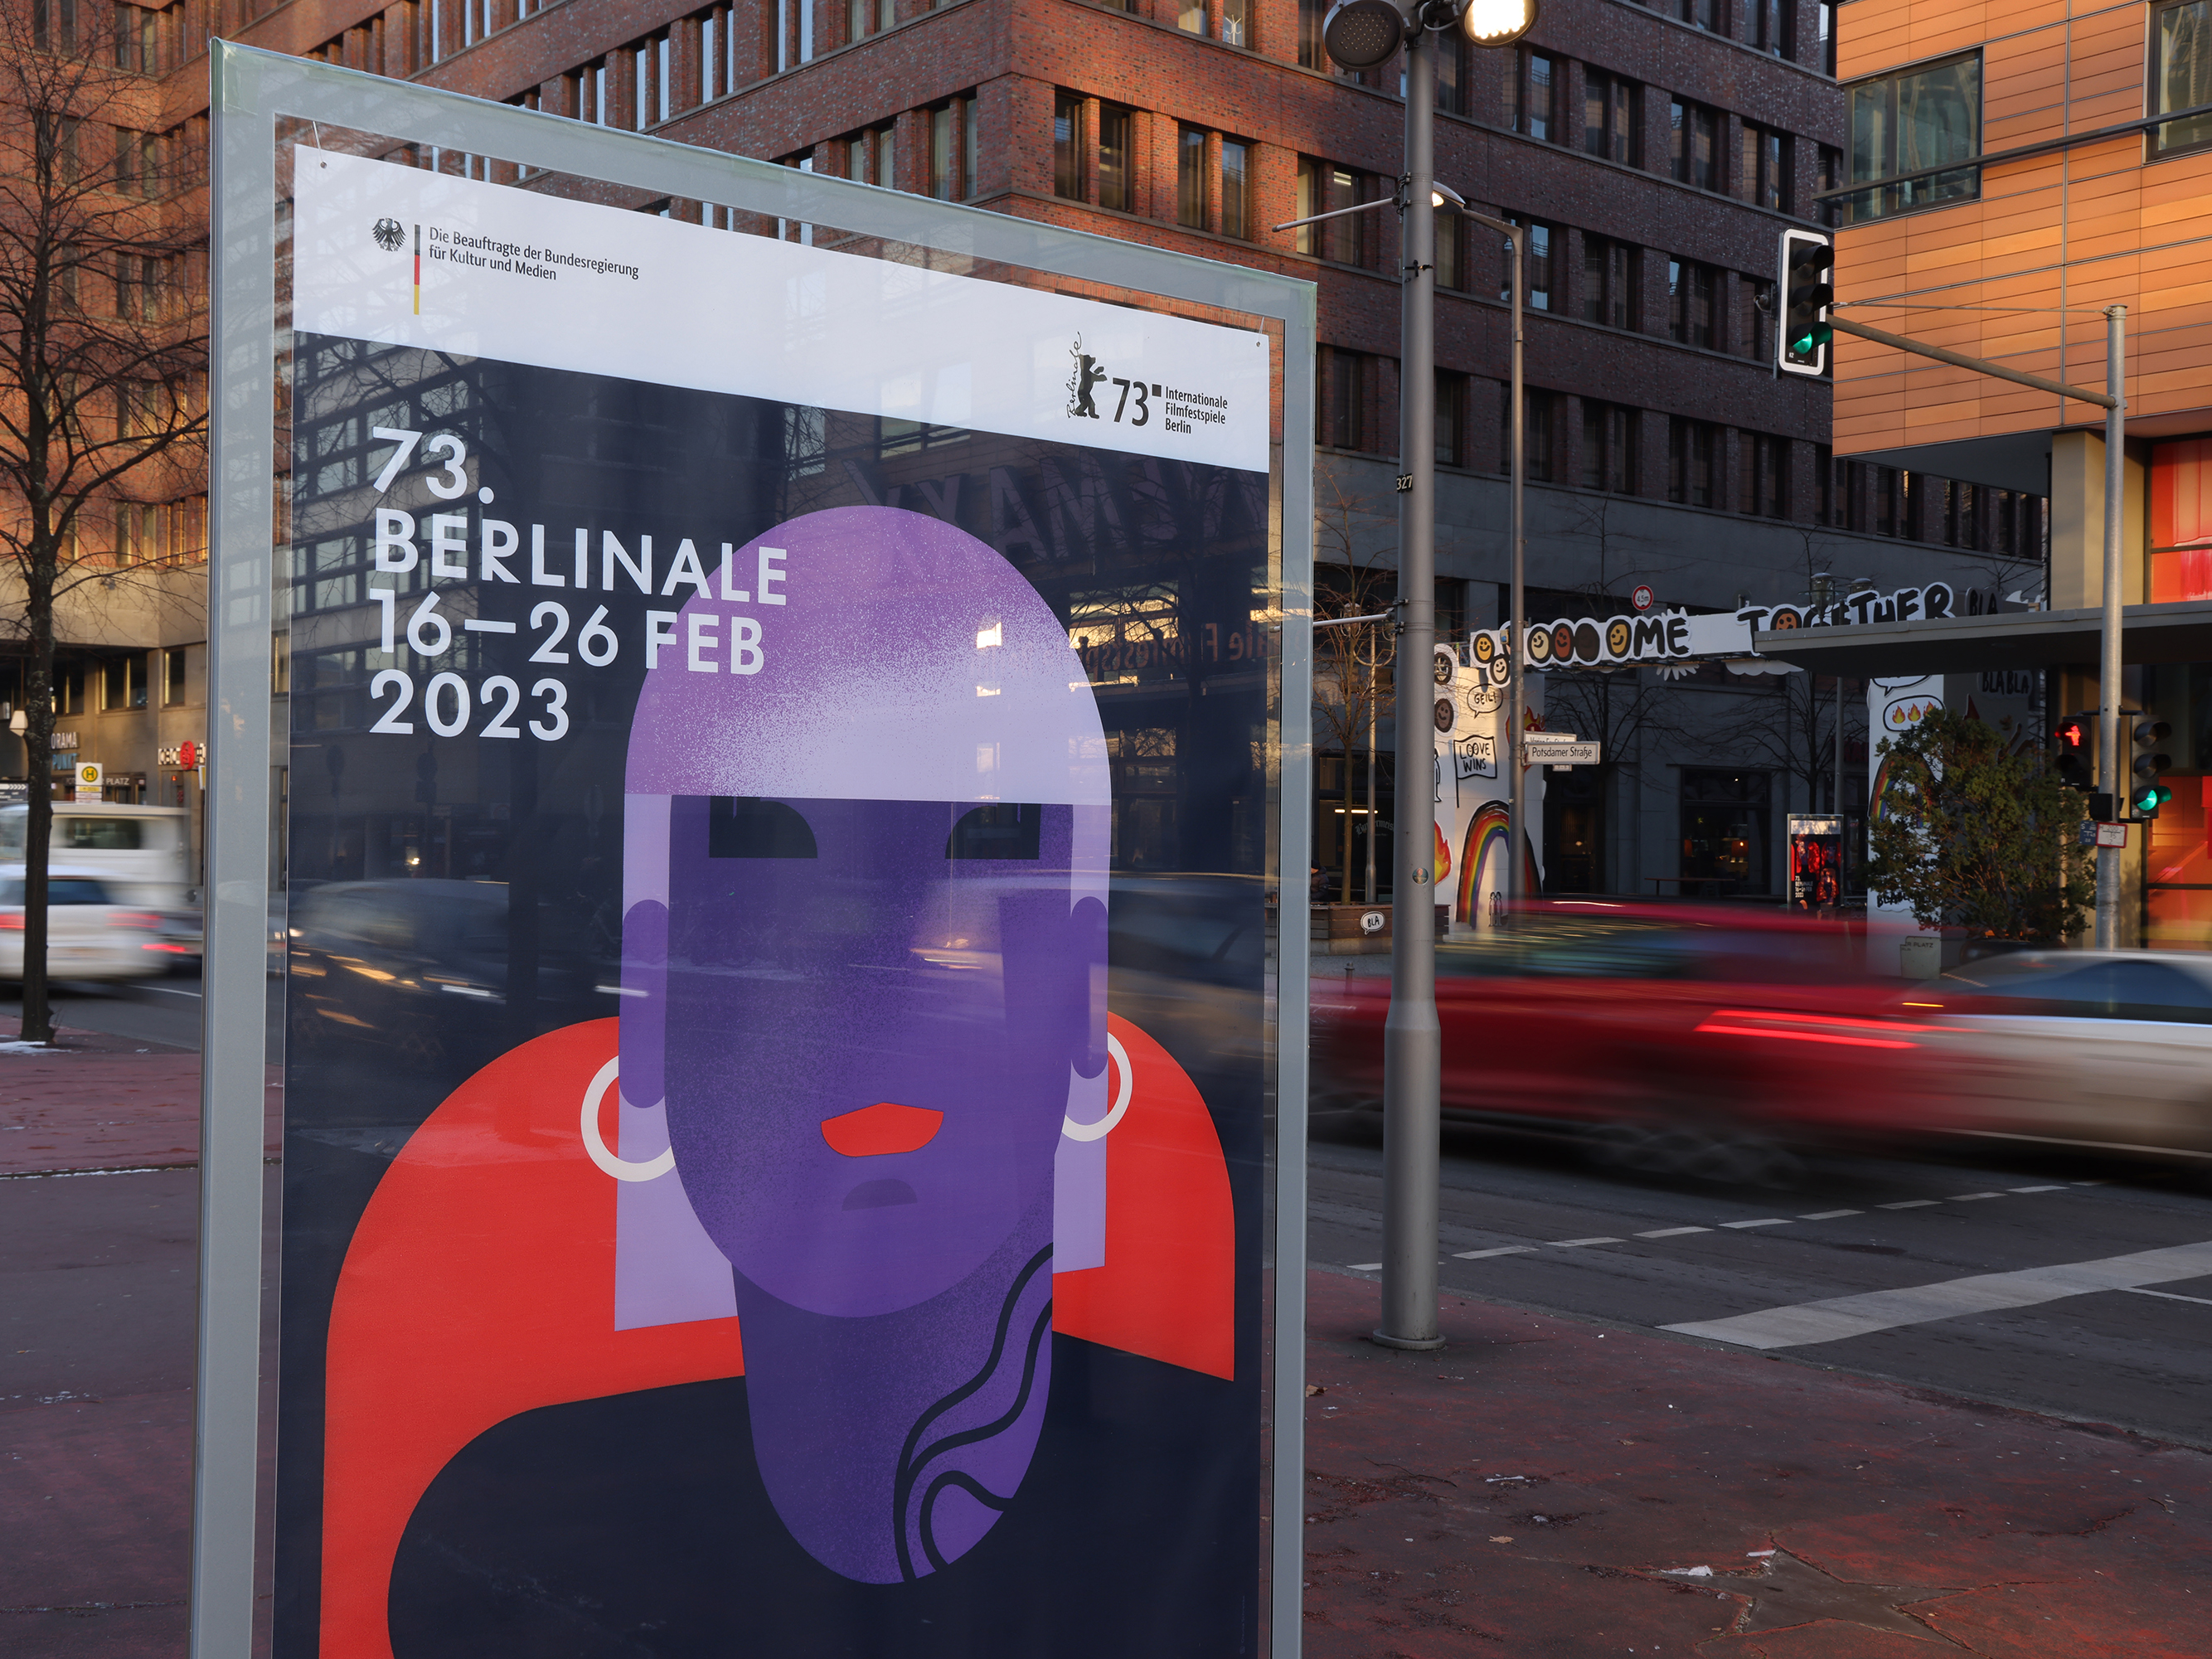 Berlin film festival 2023 roundup – prestige, politics and ethical